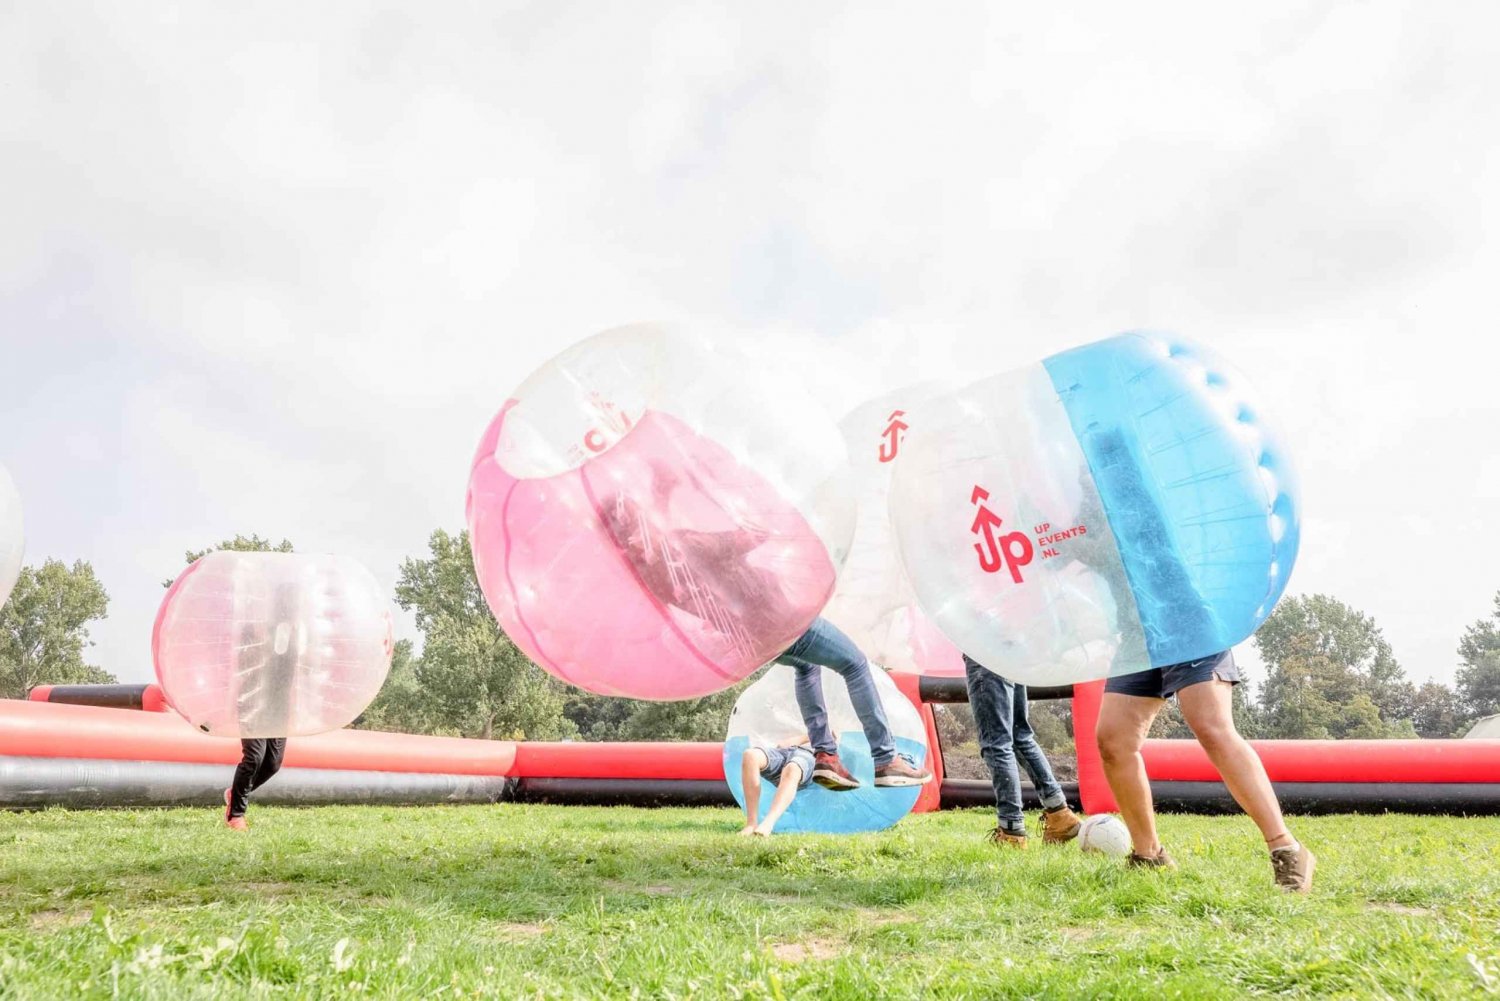 Amsterdam: Private Bubble Football Game